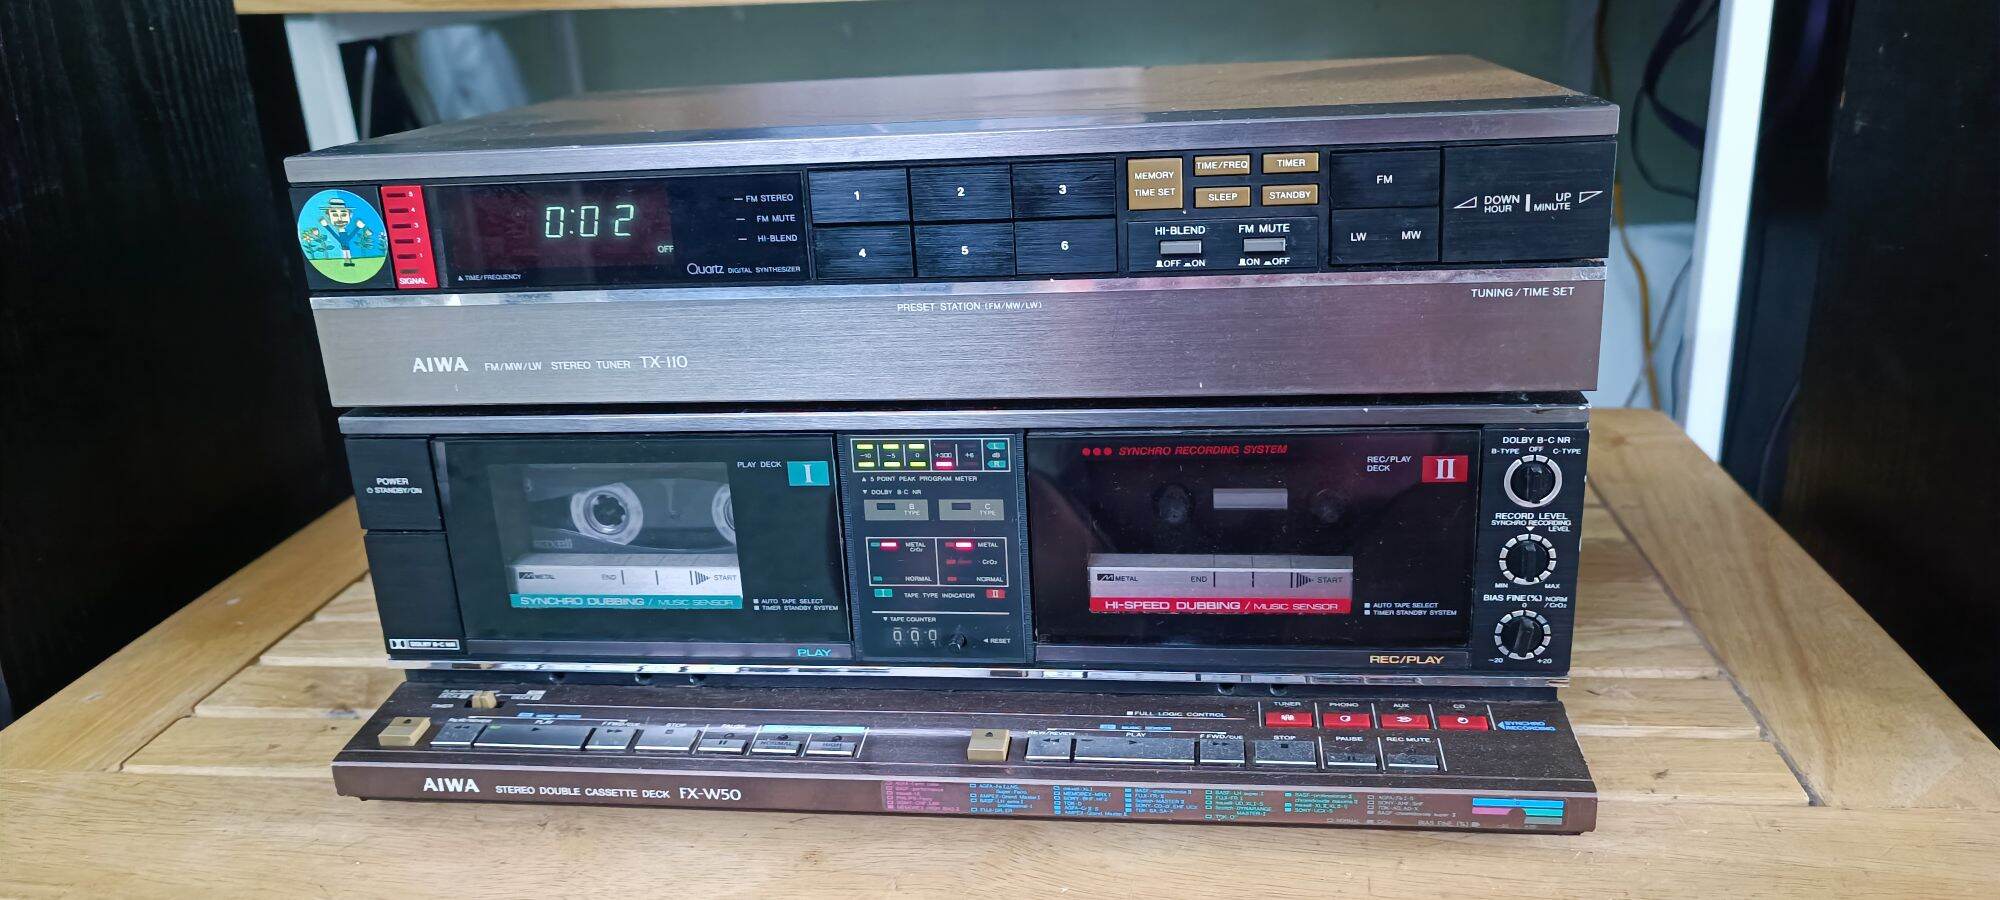 Bộ đôi Tuner + cassette 2 tape size trung aiwa cao cấp